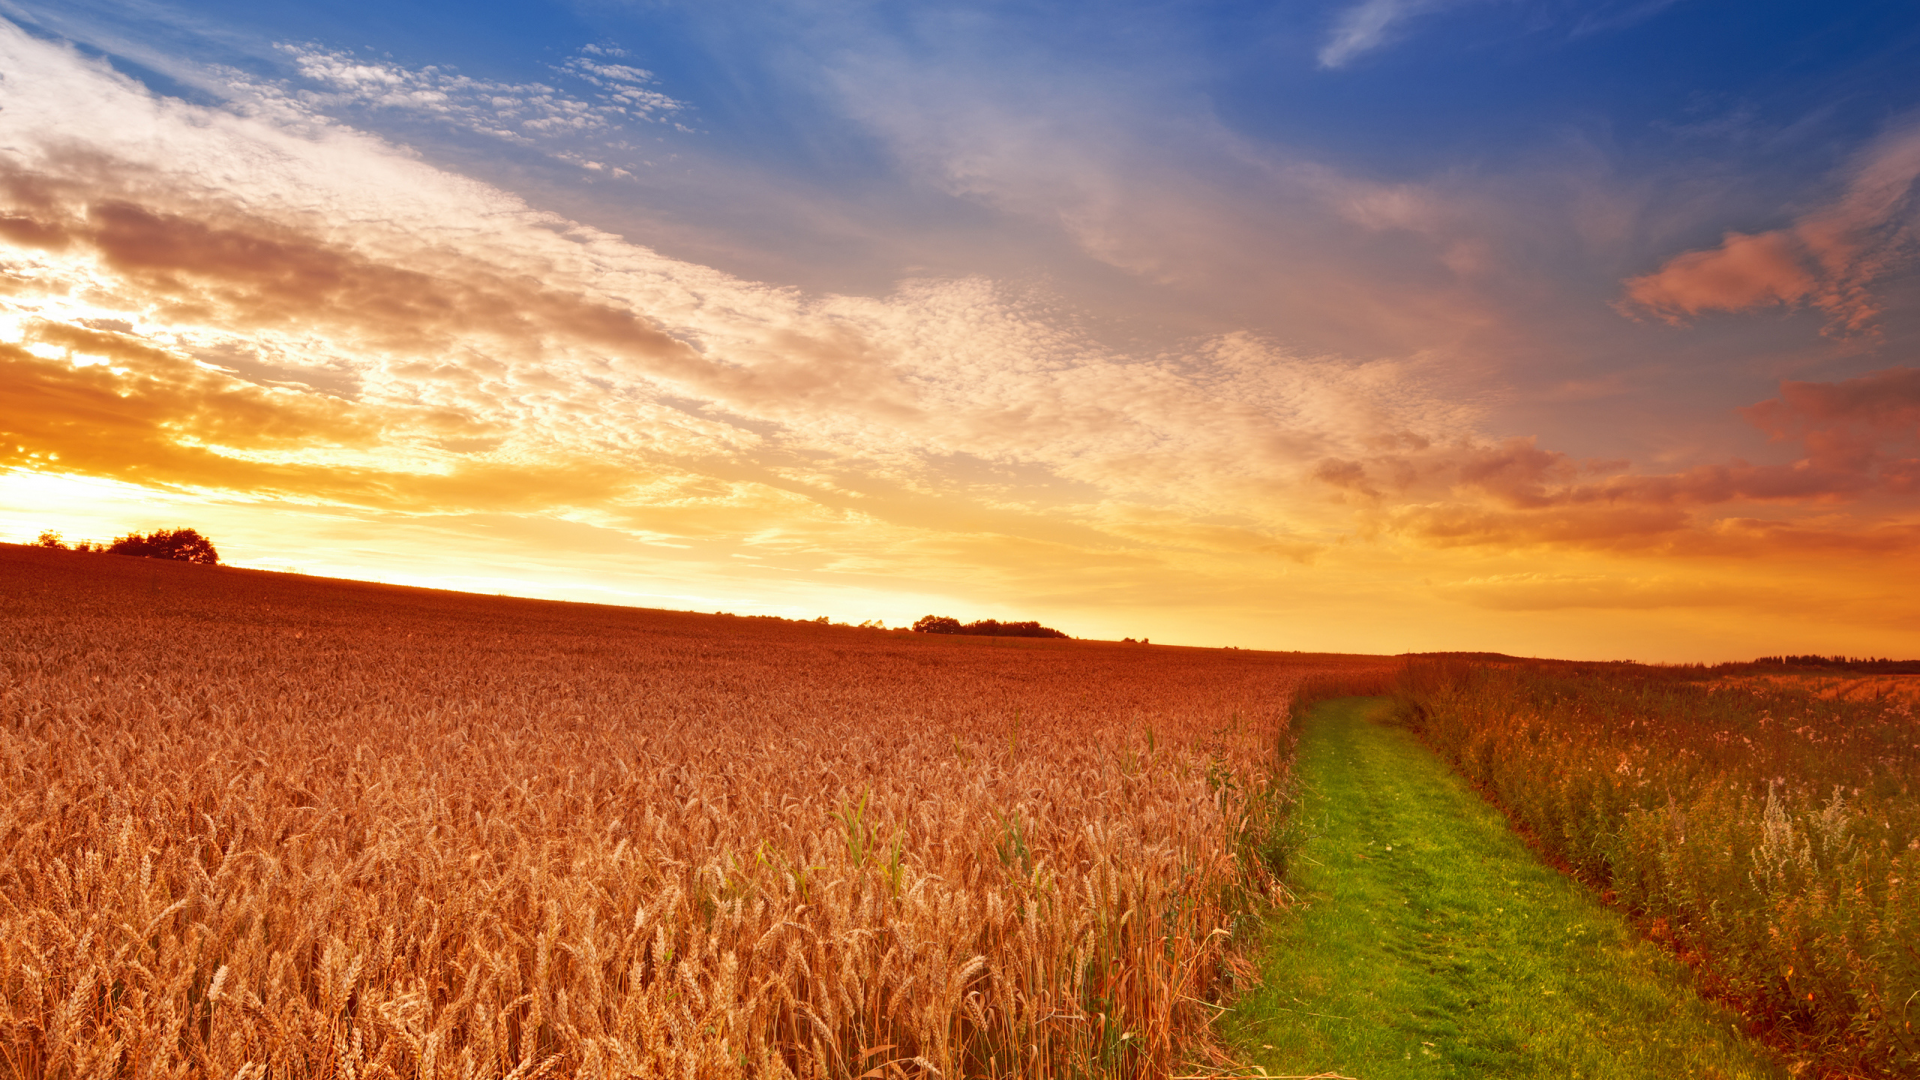 пшеница, колосья, поле, дорога, трава, облака, небо, солнце